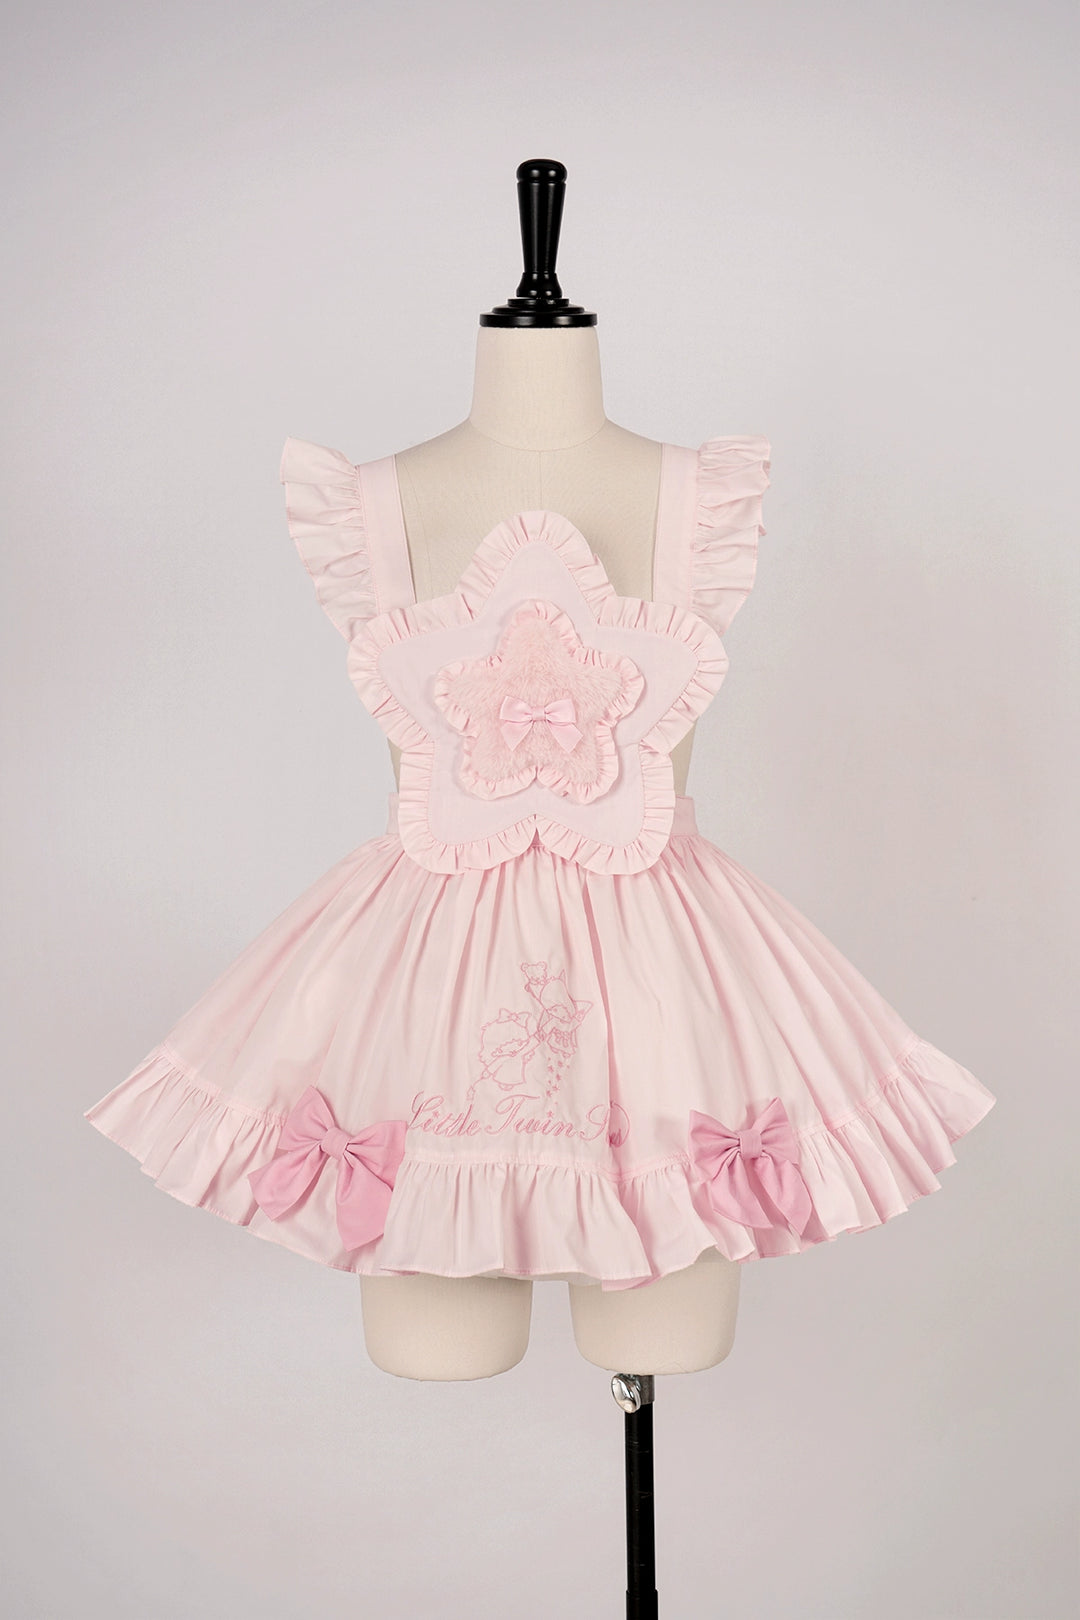 Vcastle~Sweet Lolita OP Dress Splicing Sleeve Apron Dot Print Dress S pink apron 